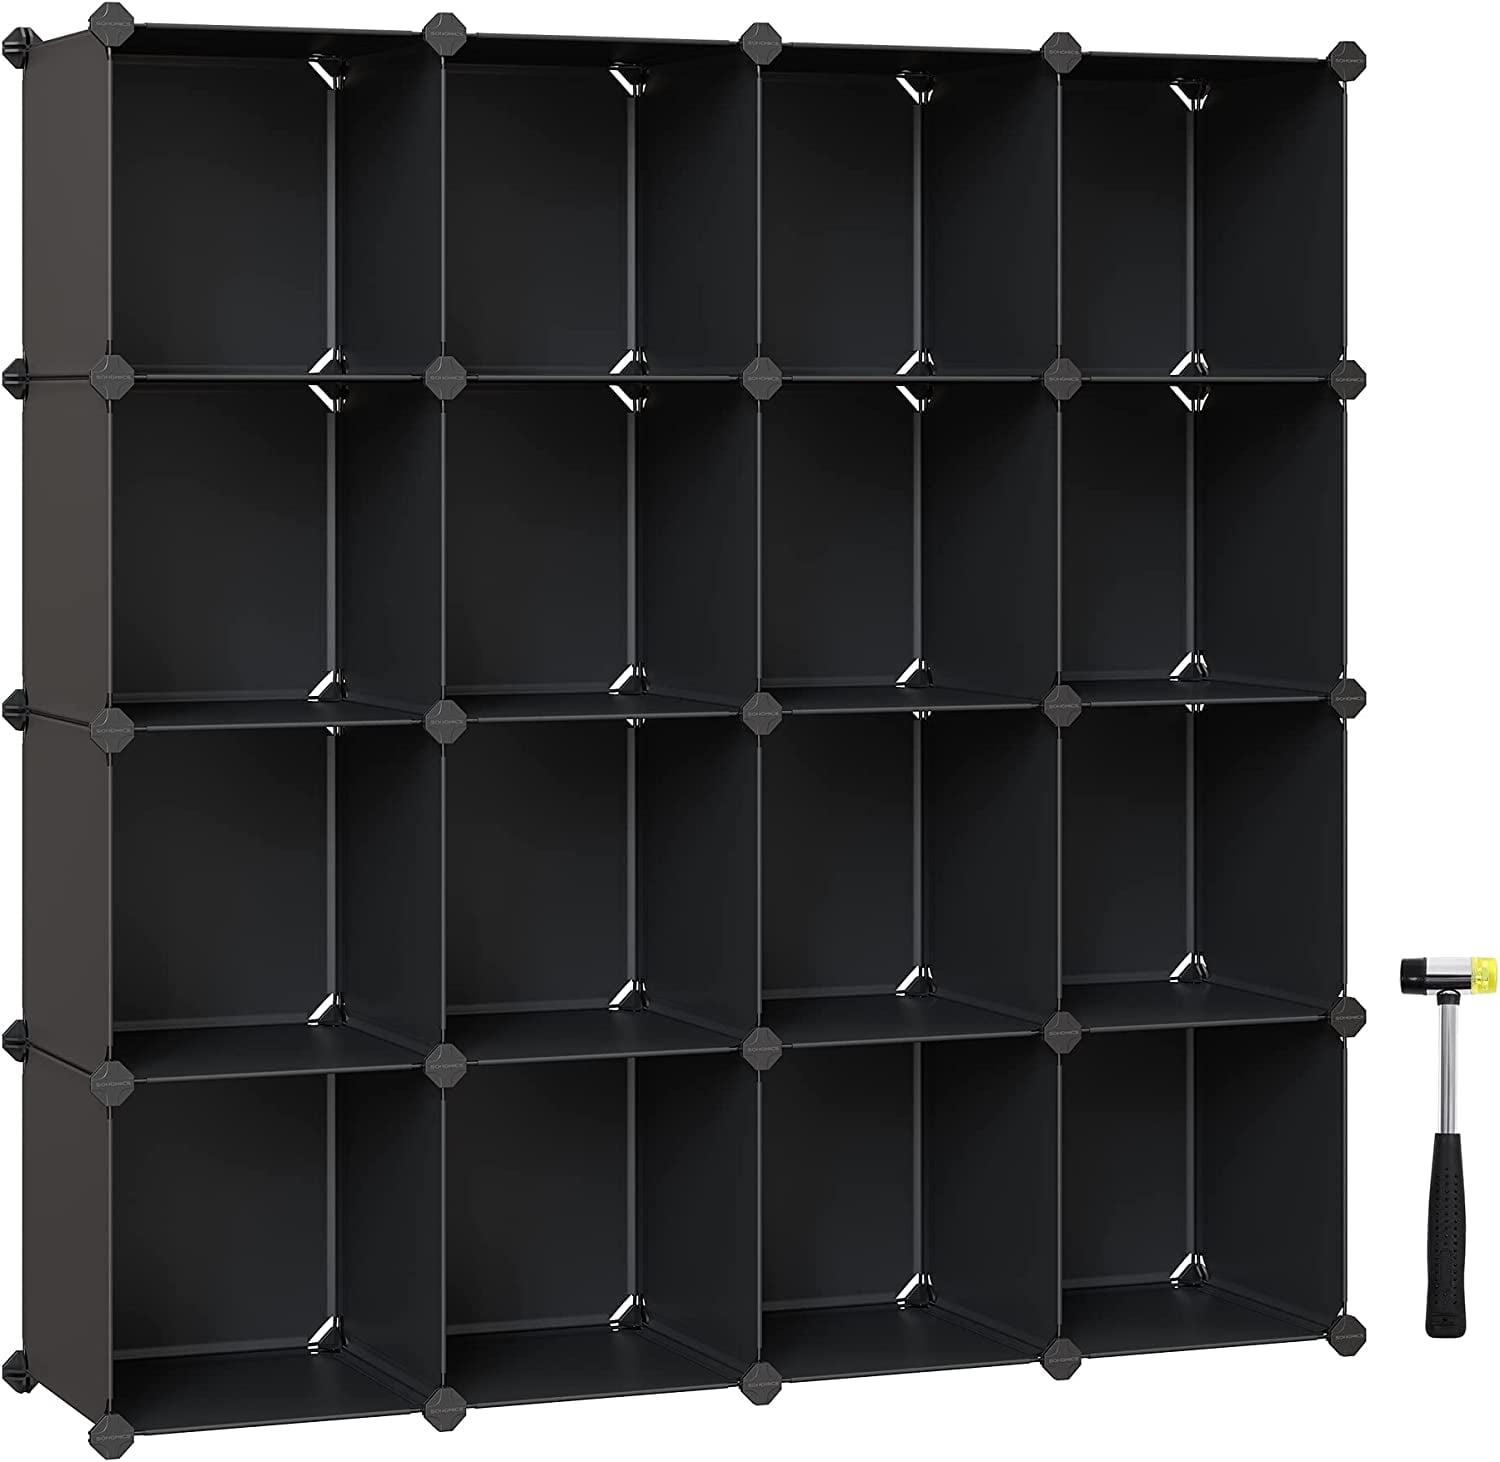 Vinyl Record Storage Rack Home Rustic 16 Cube Storage Unit Shelf Organizer Black 